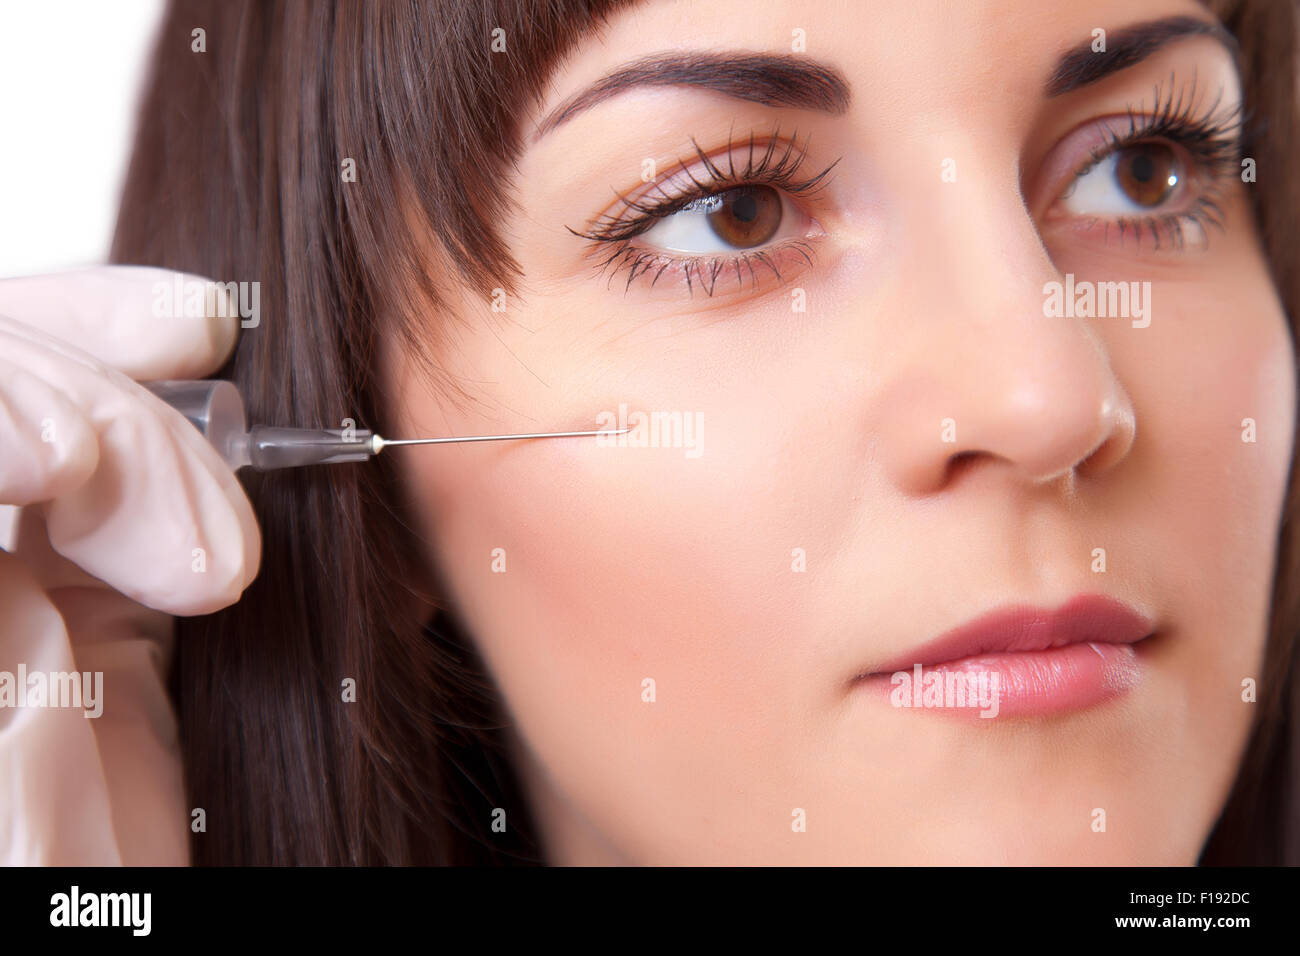 Cosmetic injection, beautiful woman close-up studio portrait Stock Photo